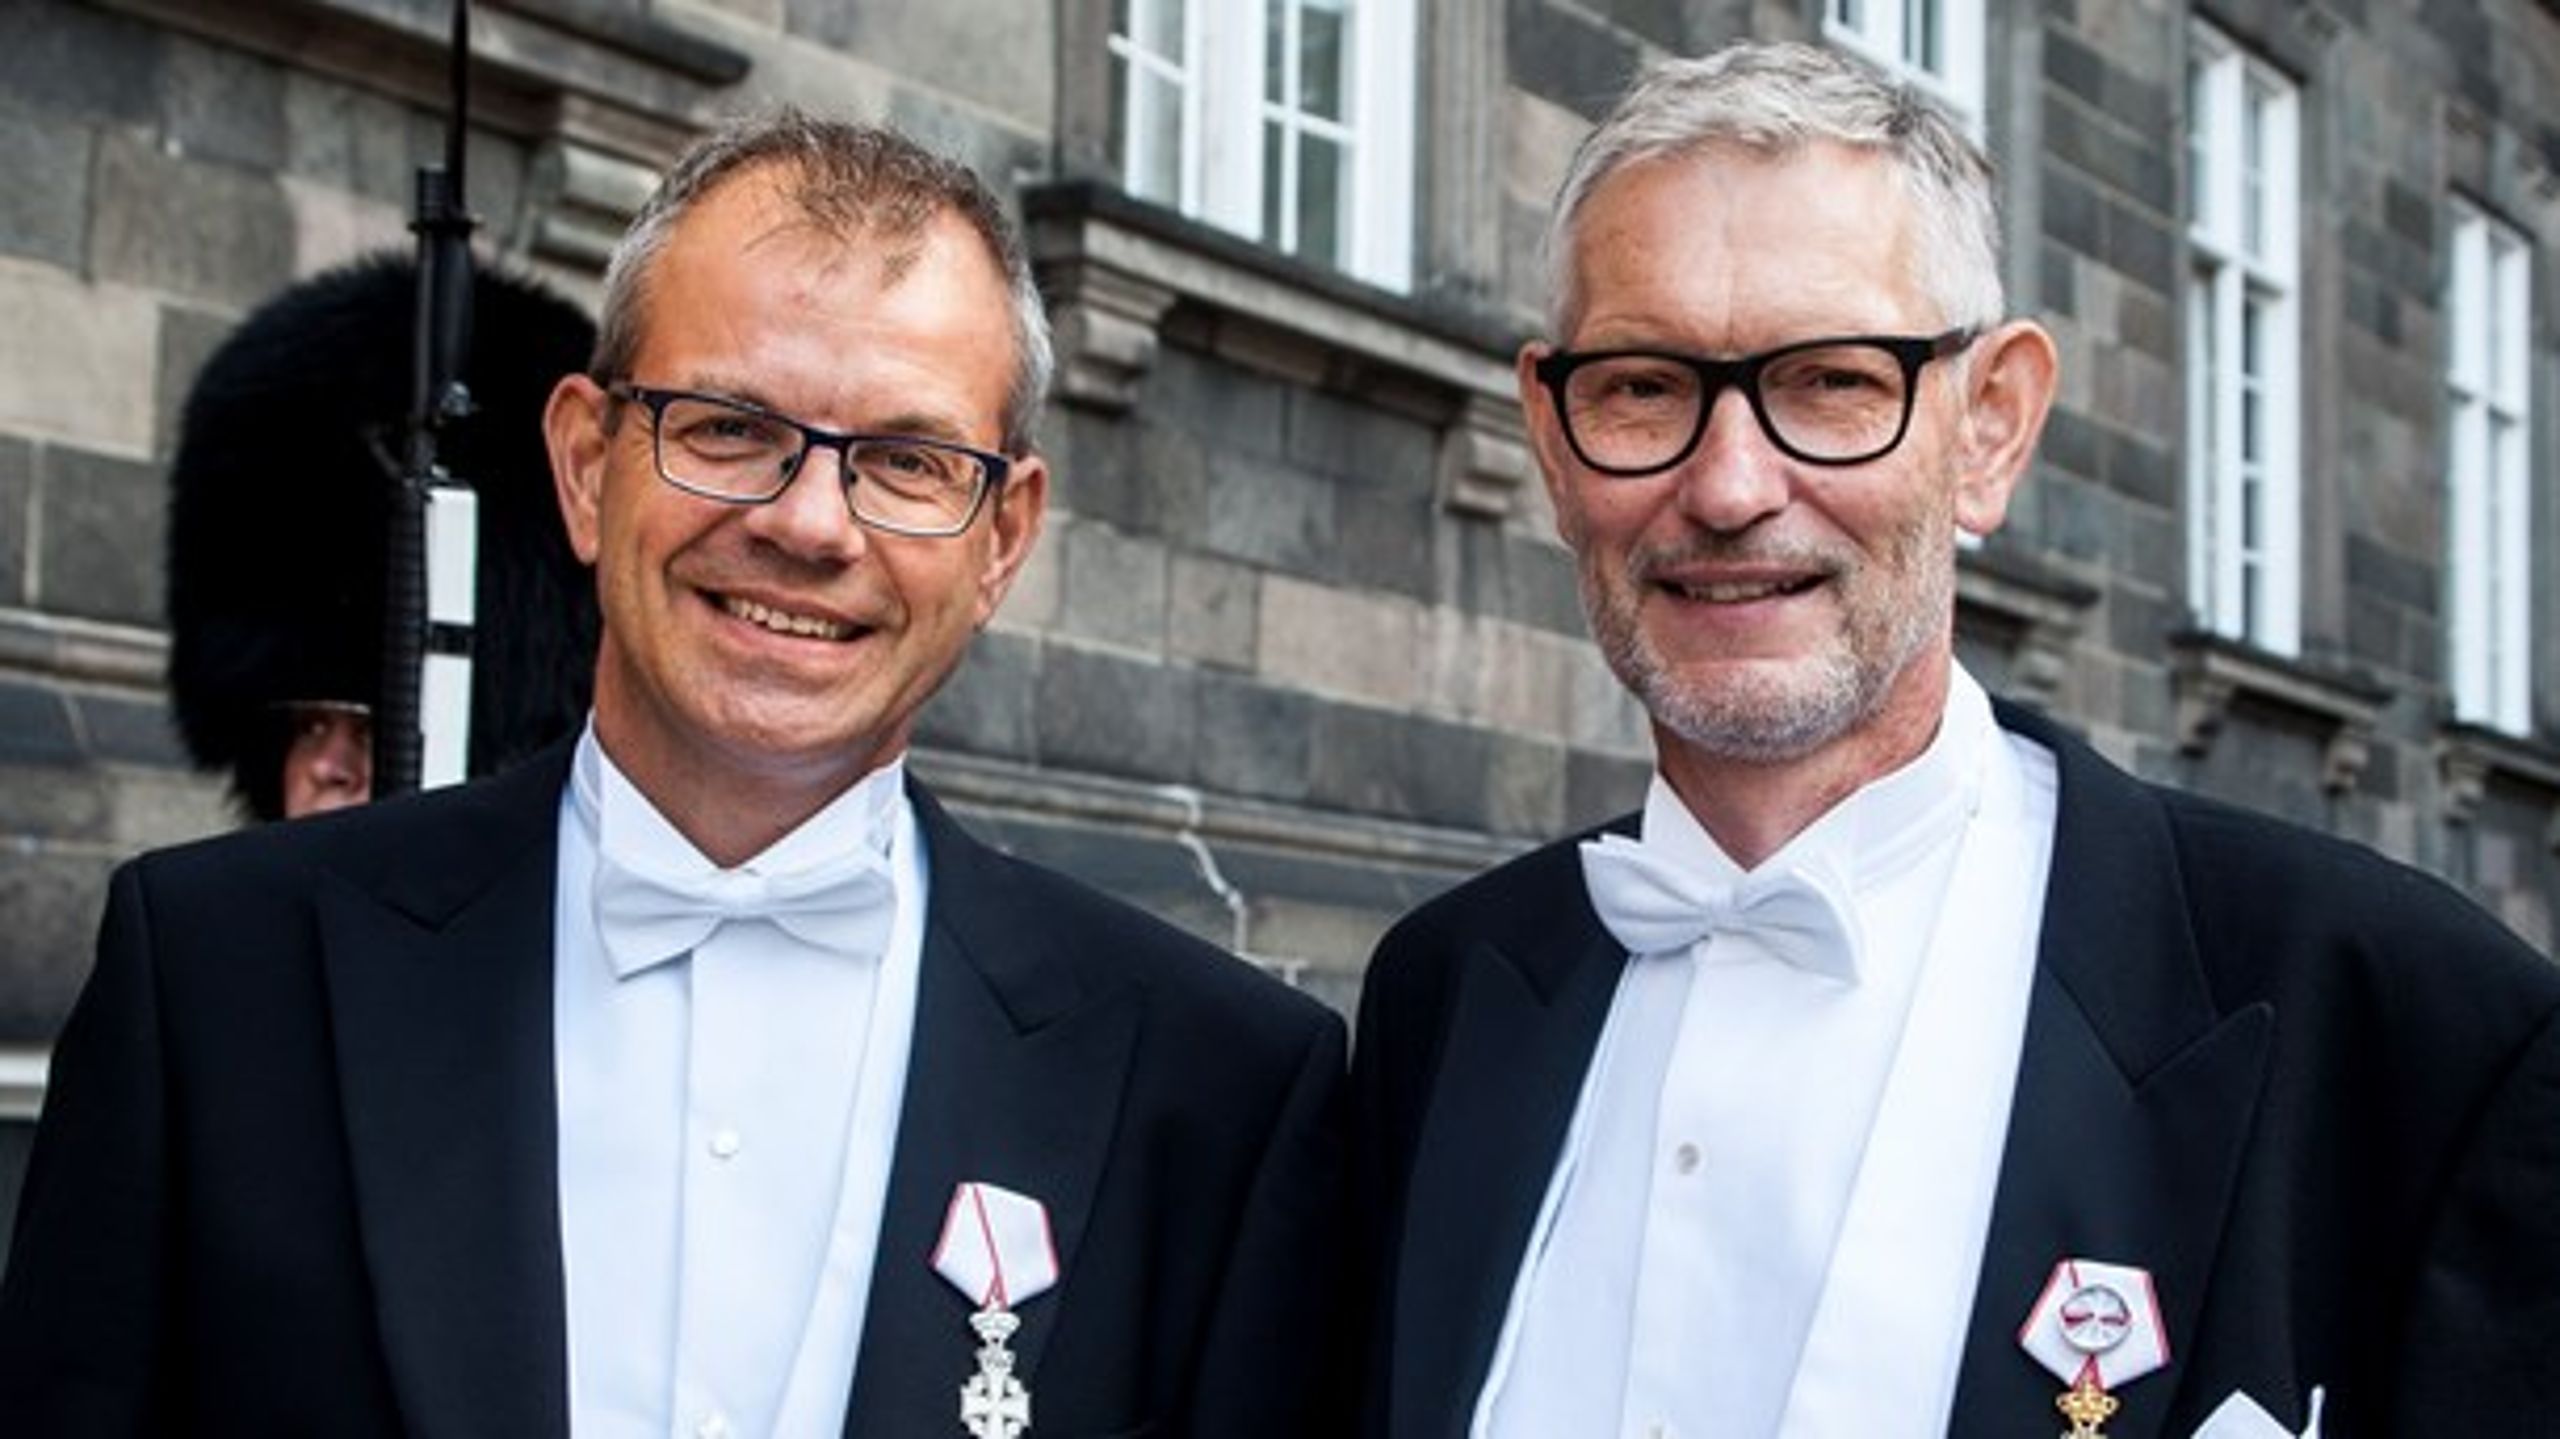 DGI's landsformand gennem 17 år,&nbsp;Søren Møller (th), modtog sidste år ridderkorset af Dannebrogsordenen. Efter årsmødet 3. november i år&nbsp;forlader han DGI.&nbsp;